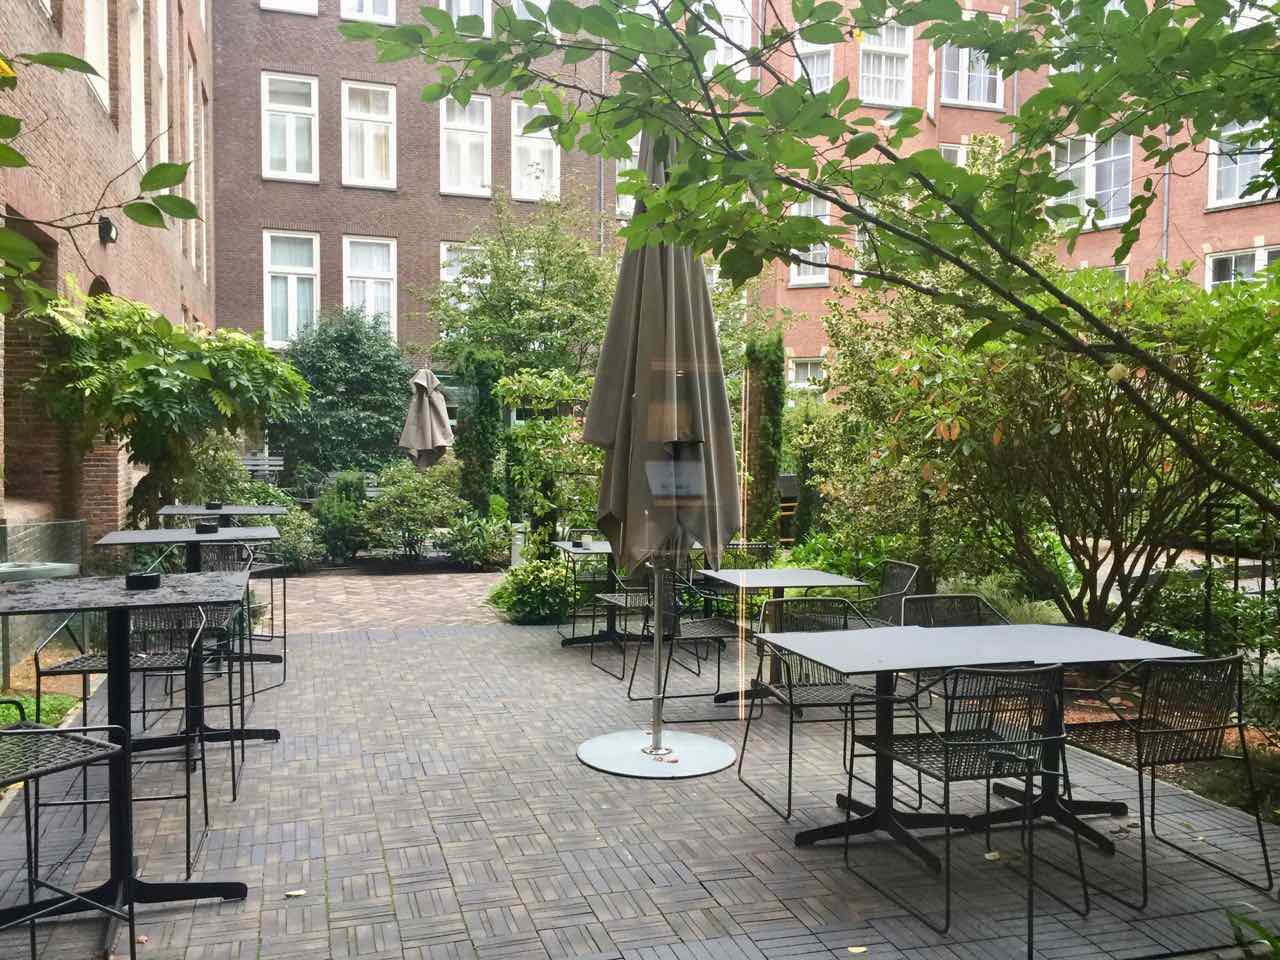 Sofitel Amsterdam | Outdoor Garden Area.